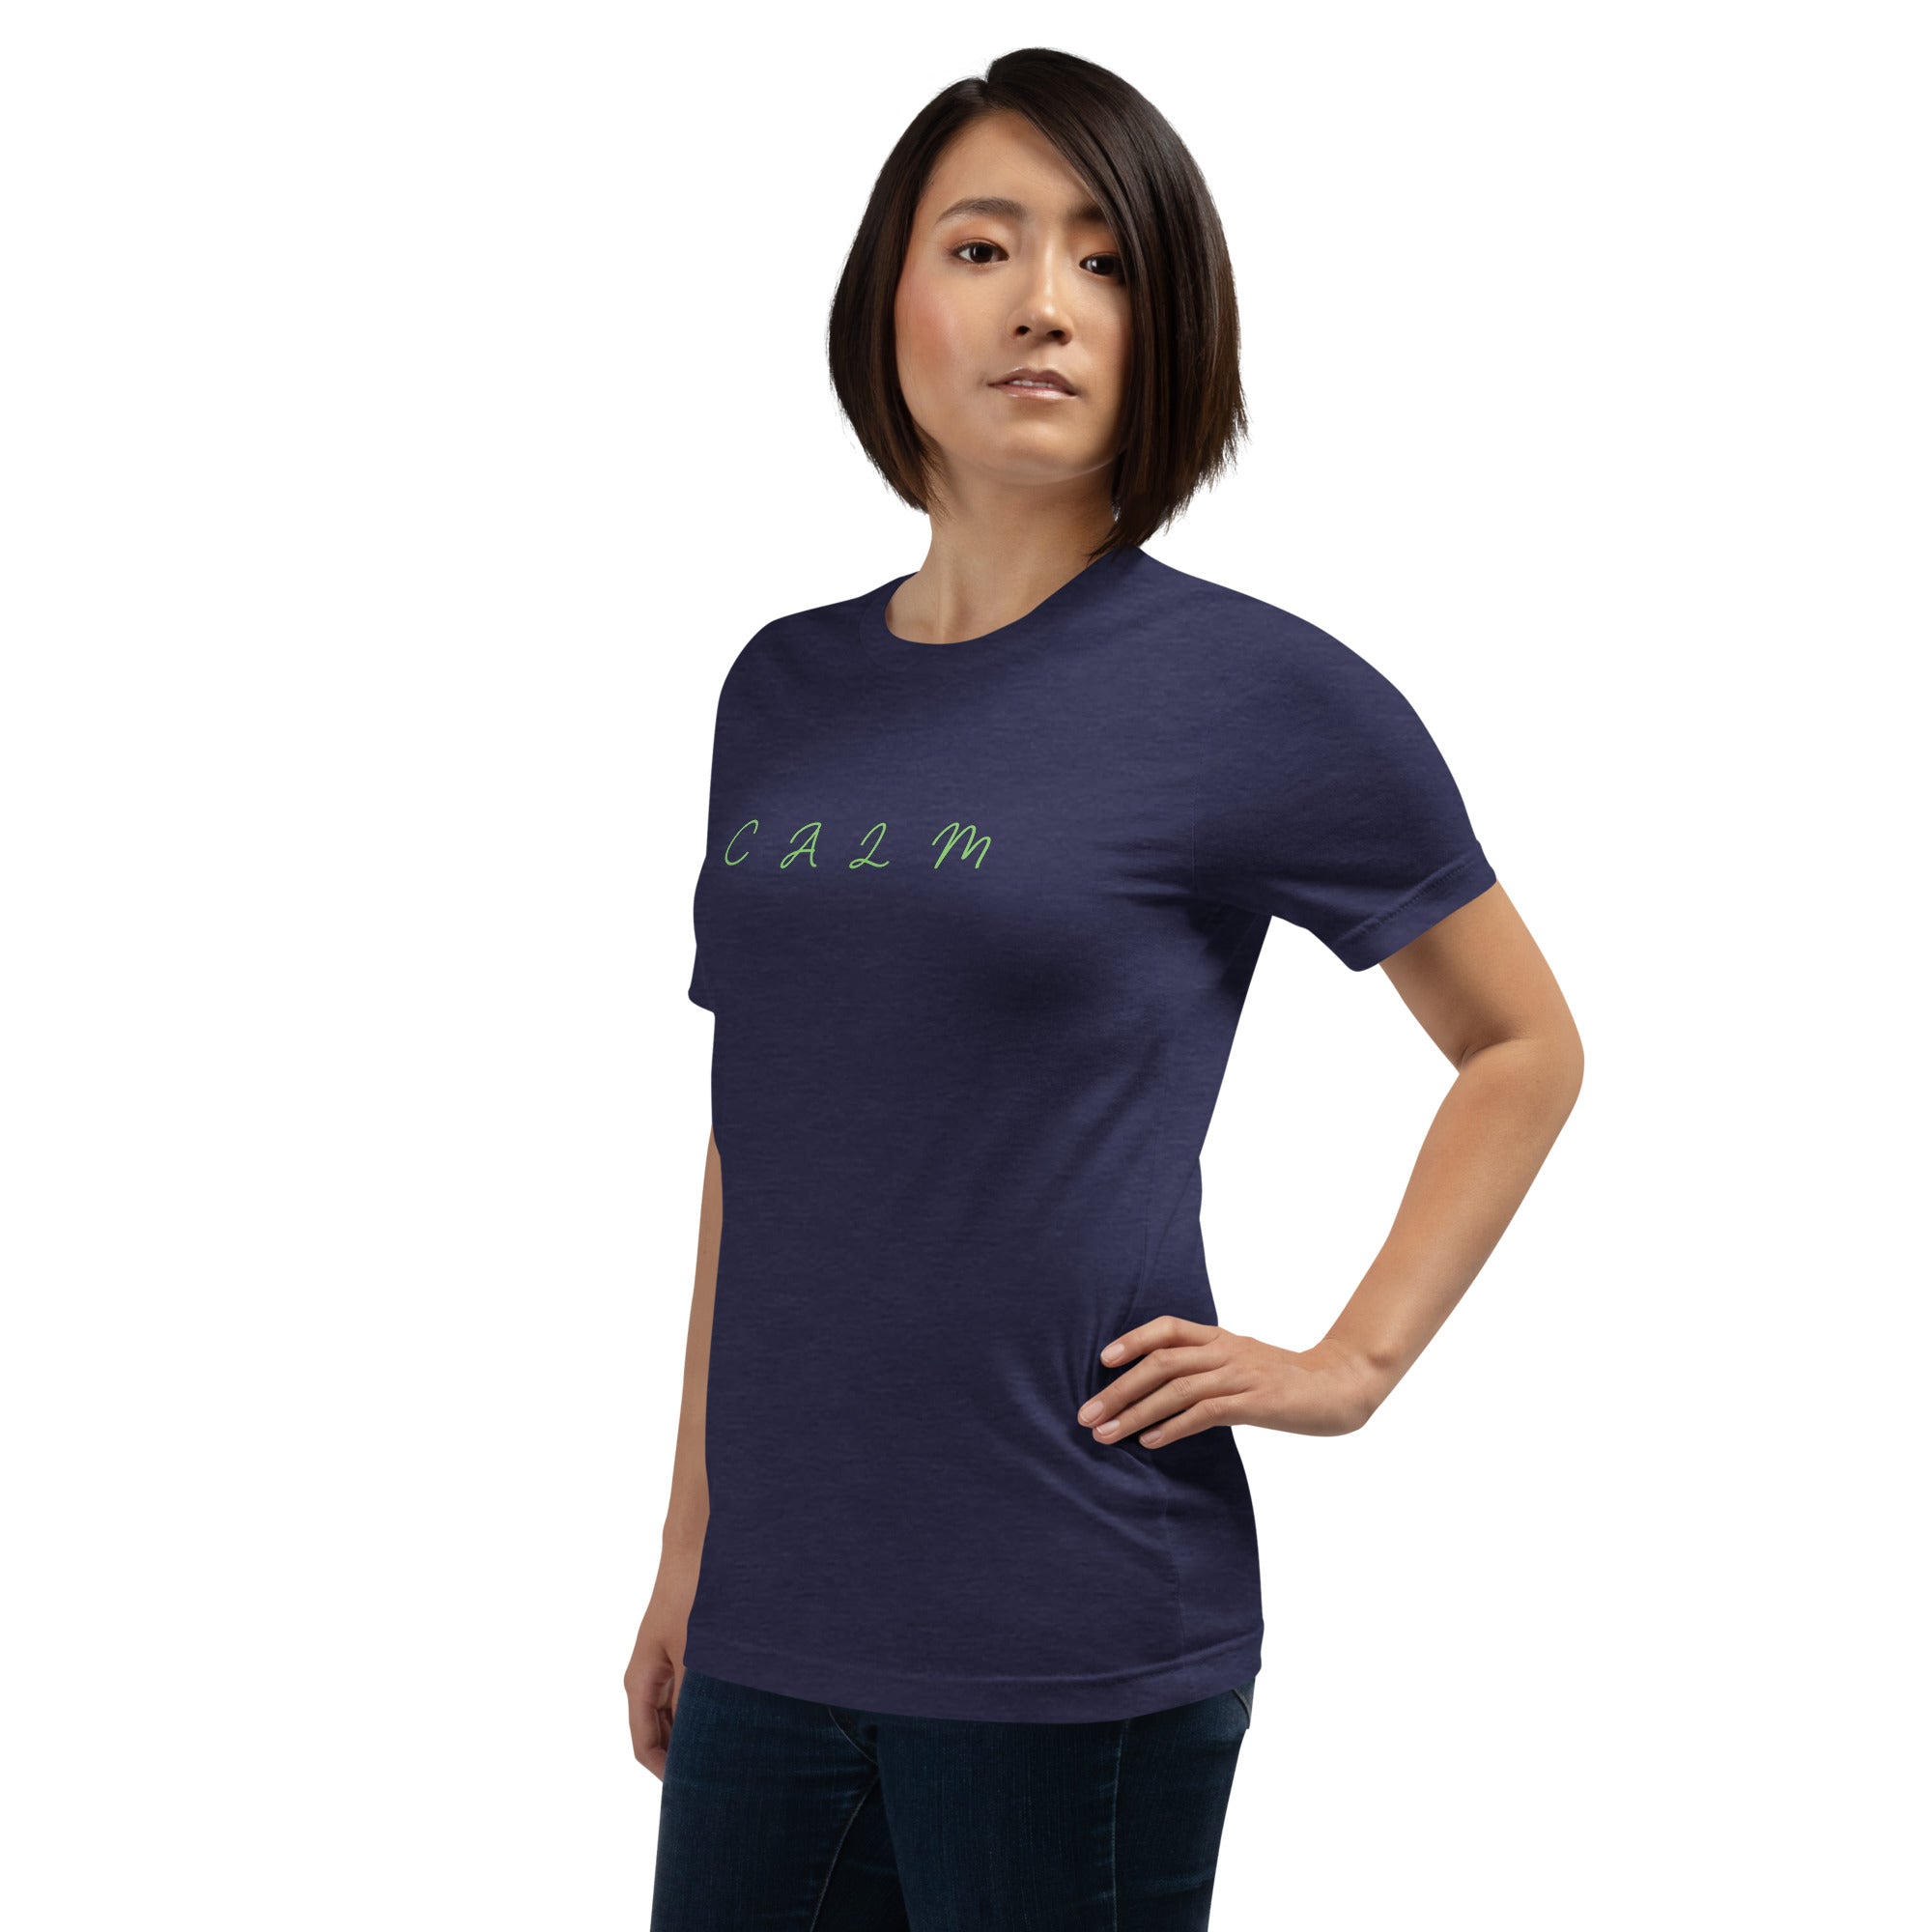 Calm, Premium Short-Sleeve Unisex T-Shirt | Positive Affirmation Tee